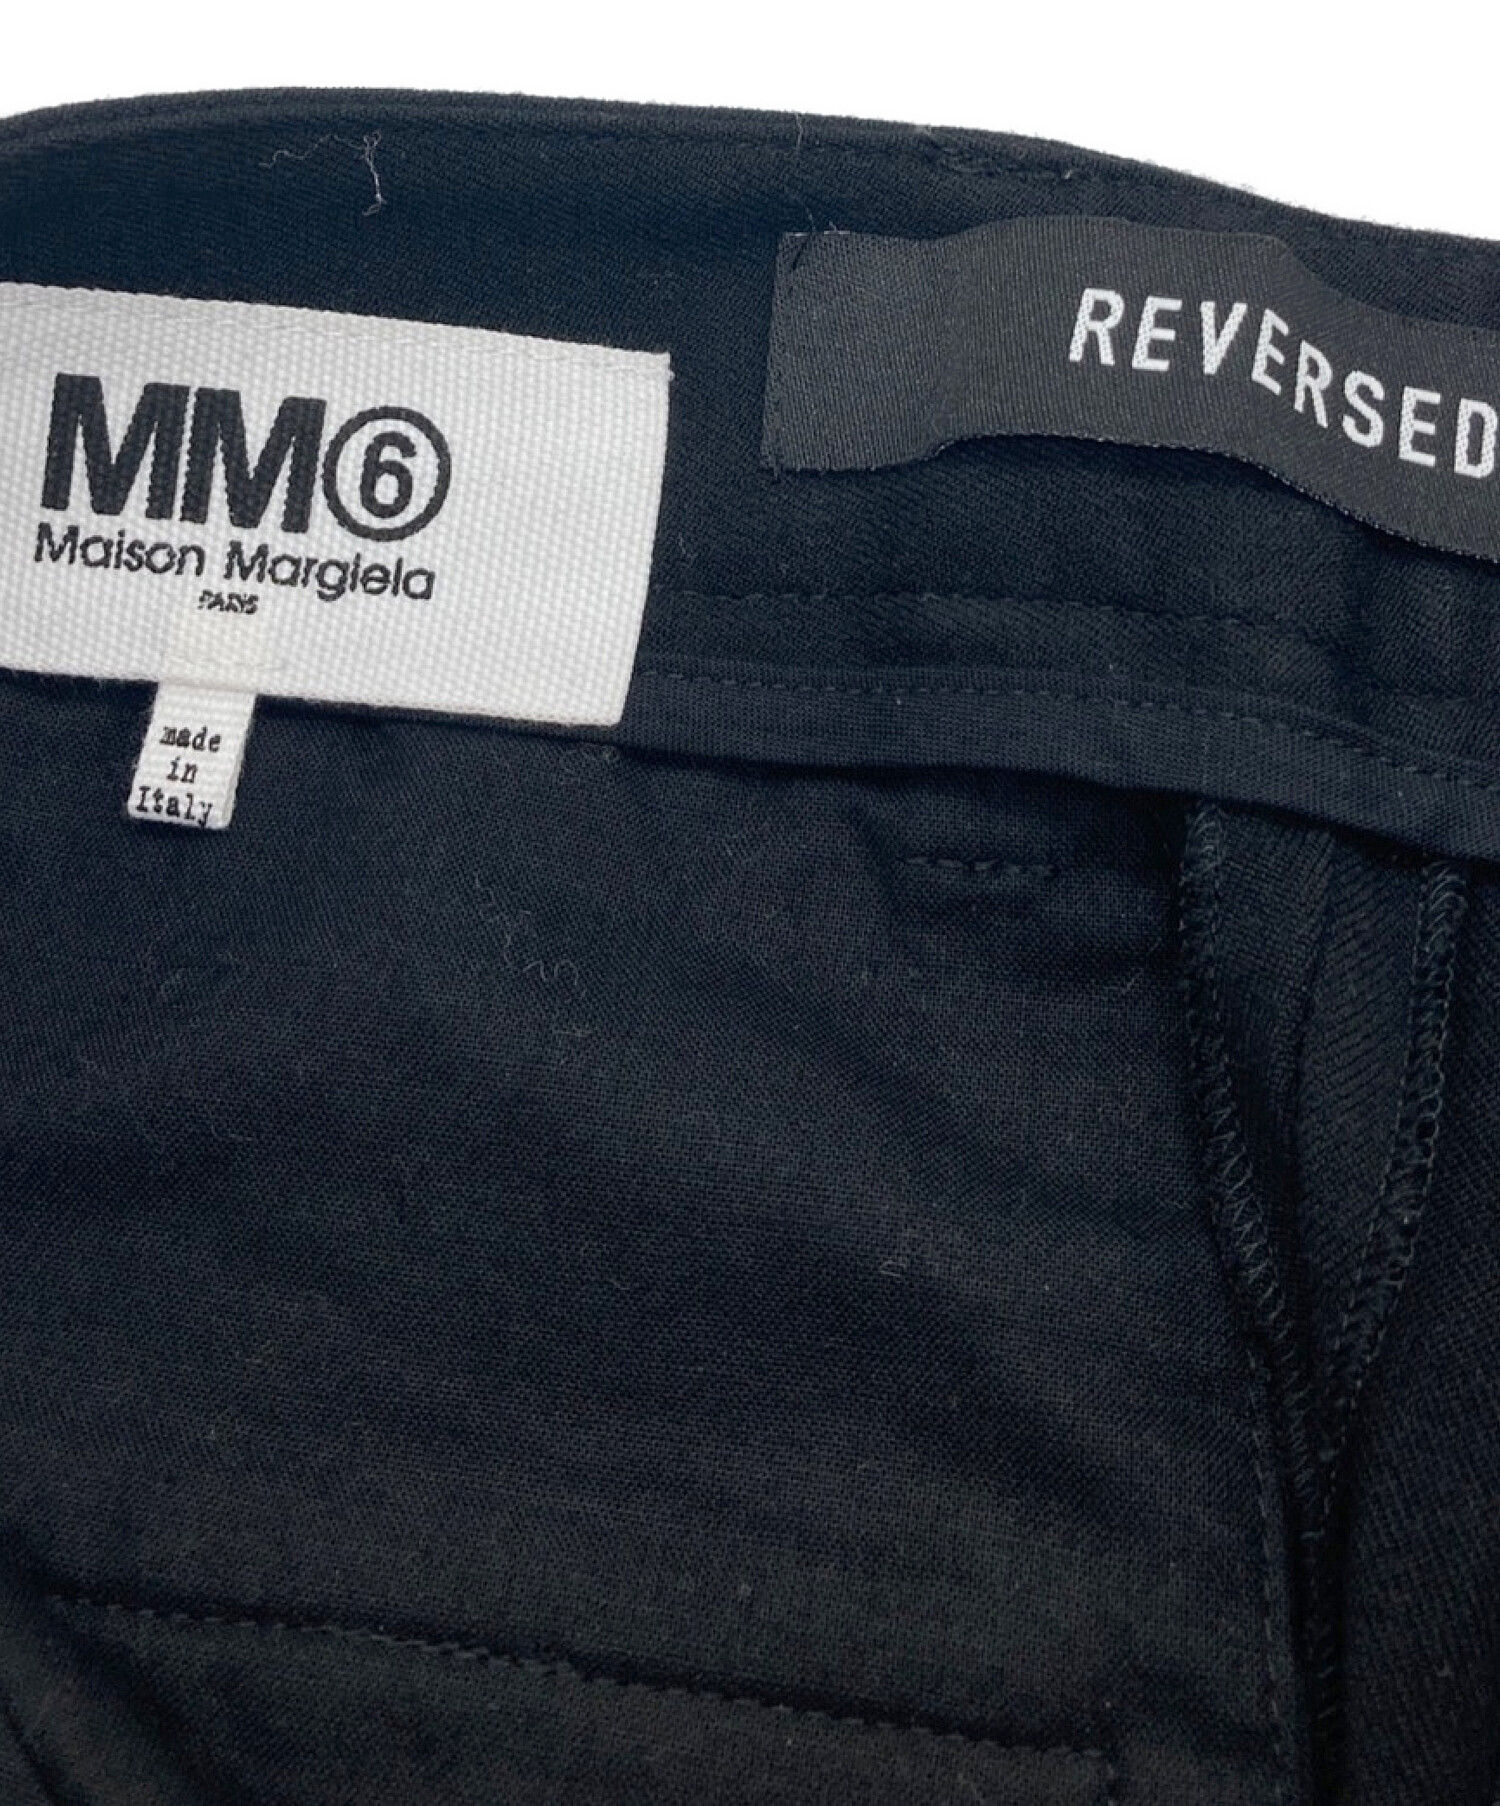 MM6 マルジェラデザインスラックス黒38 - クロップドパンツ